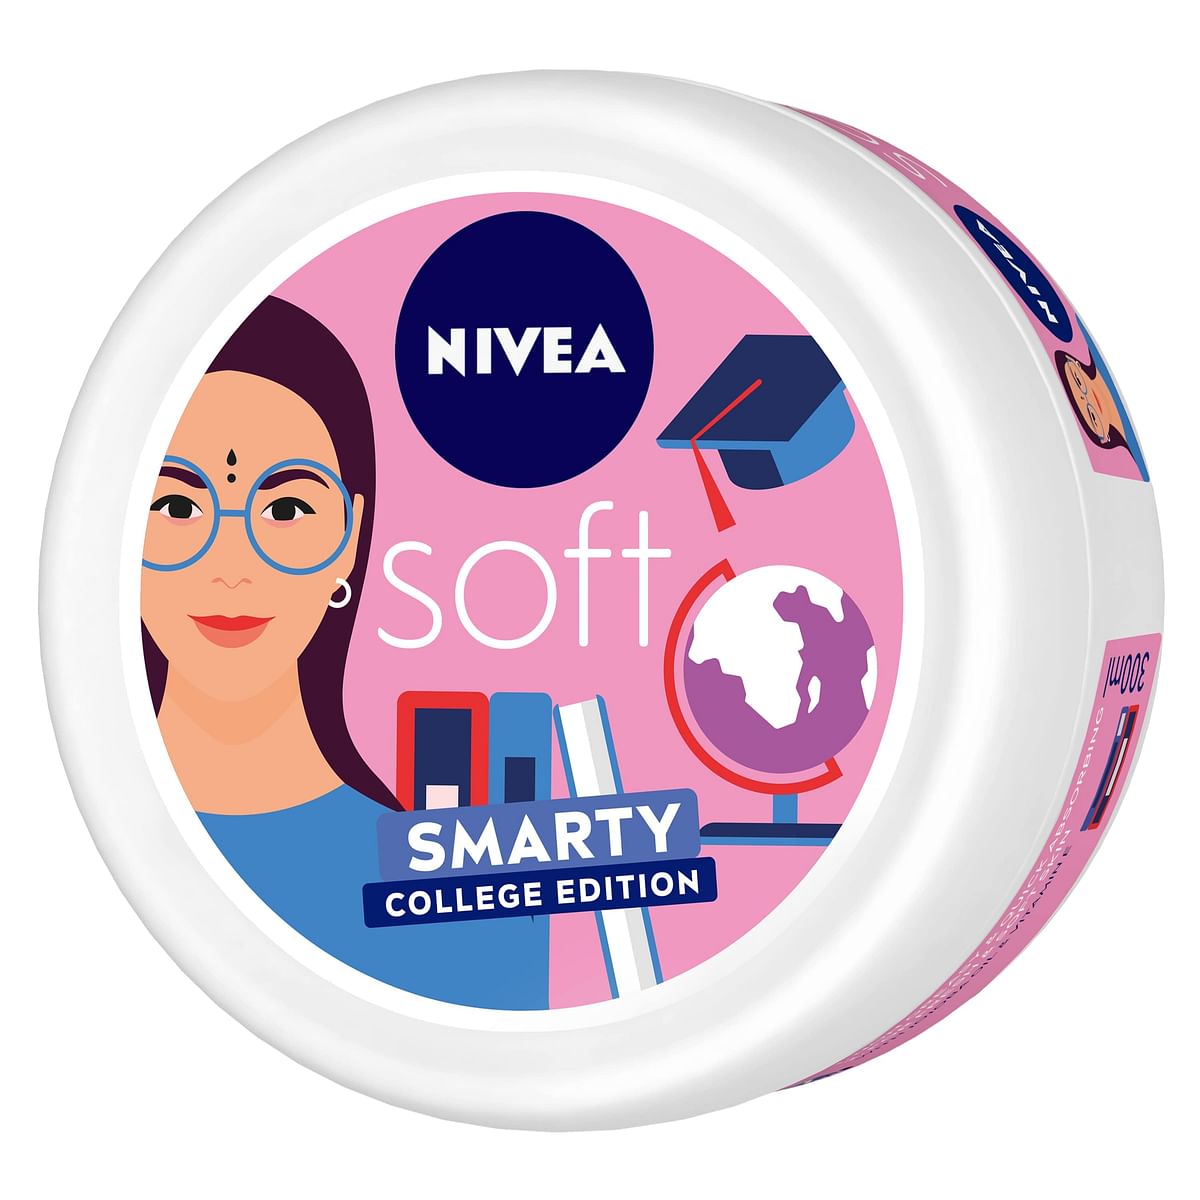 NIVEA tweaks packaging for its #NIVEASoftFreshBatch influencer initiative